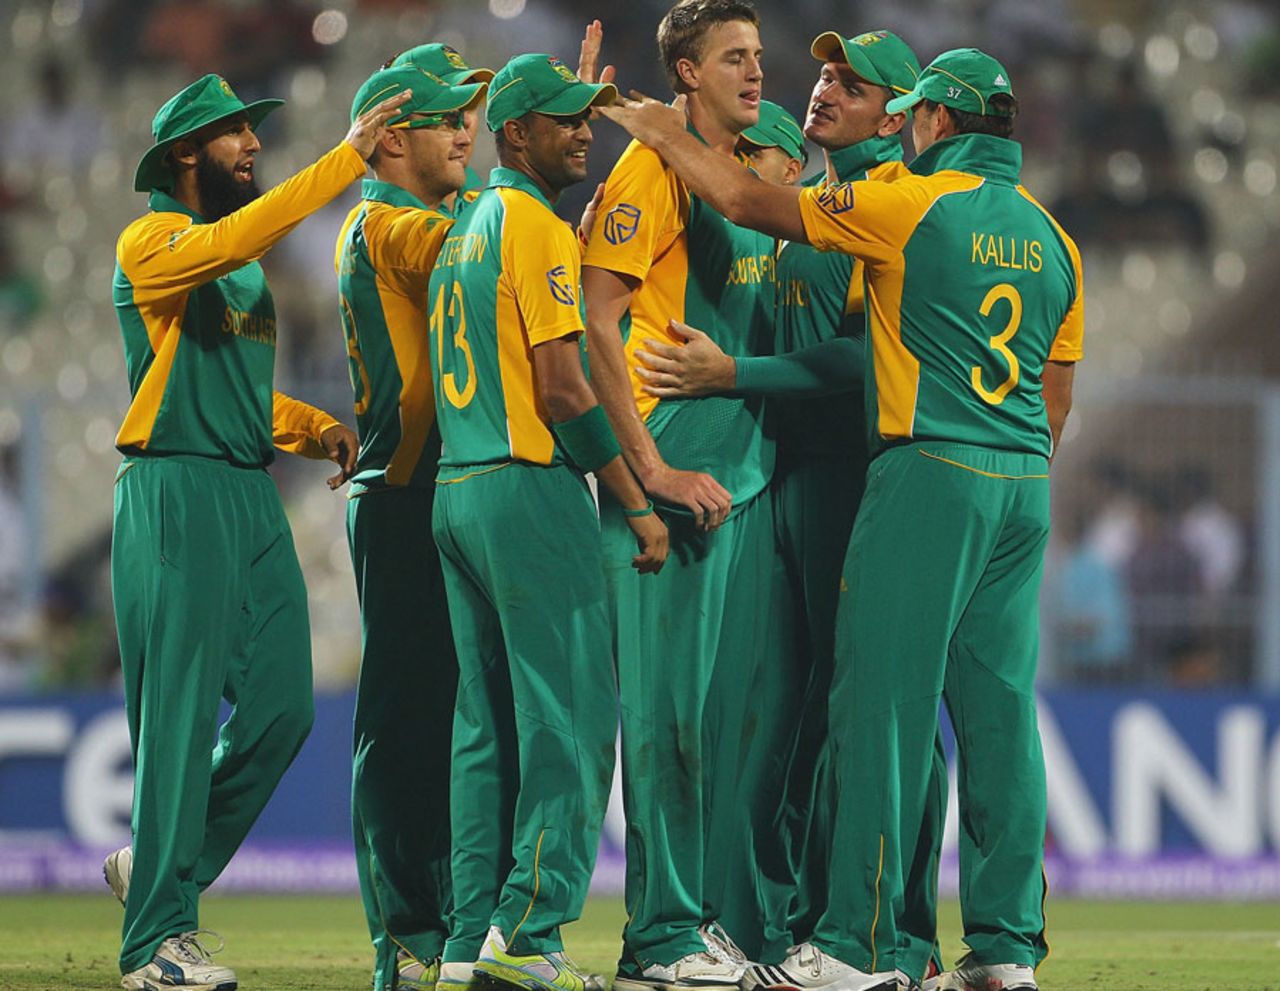 South Africa get-together after Paul Stirling's dismissal, Ireland v South Africa, Group B, World Cup, Kolkata, March 15, 2011